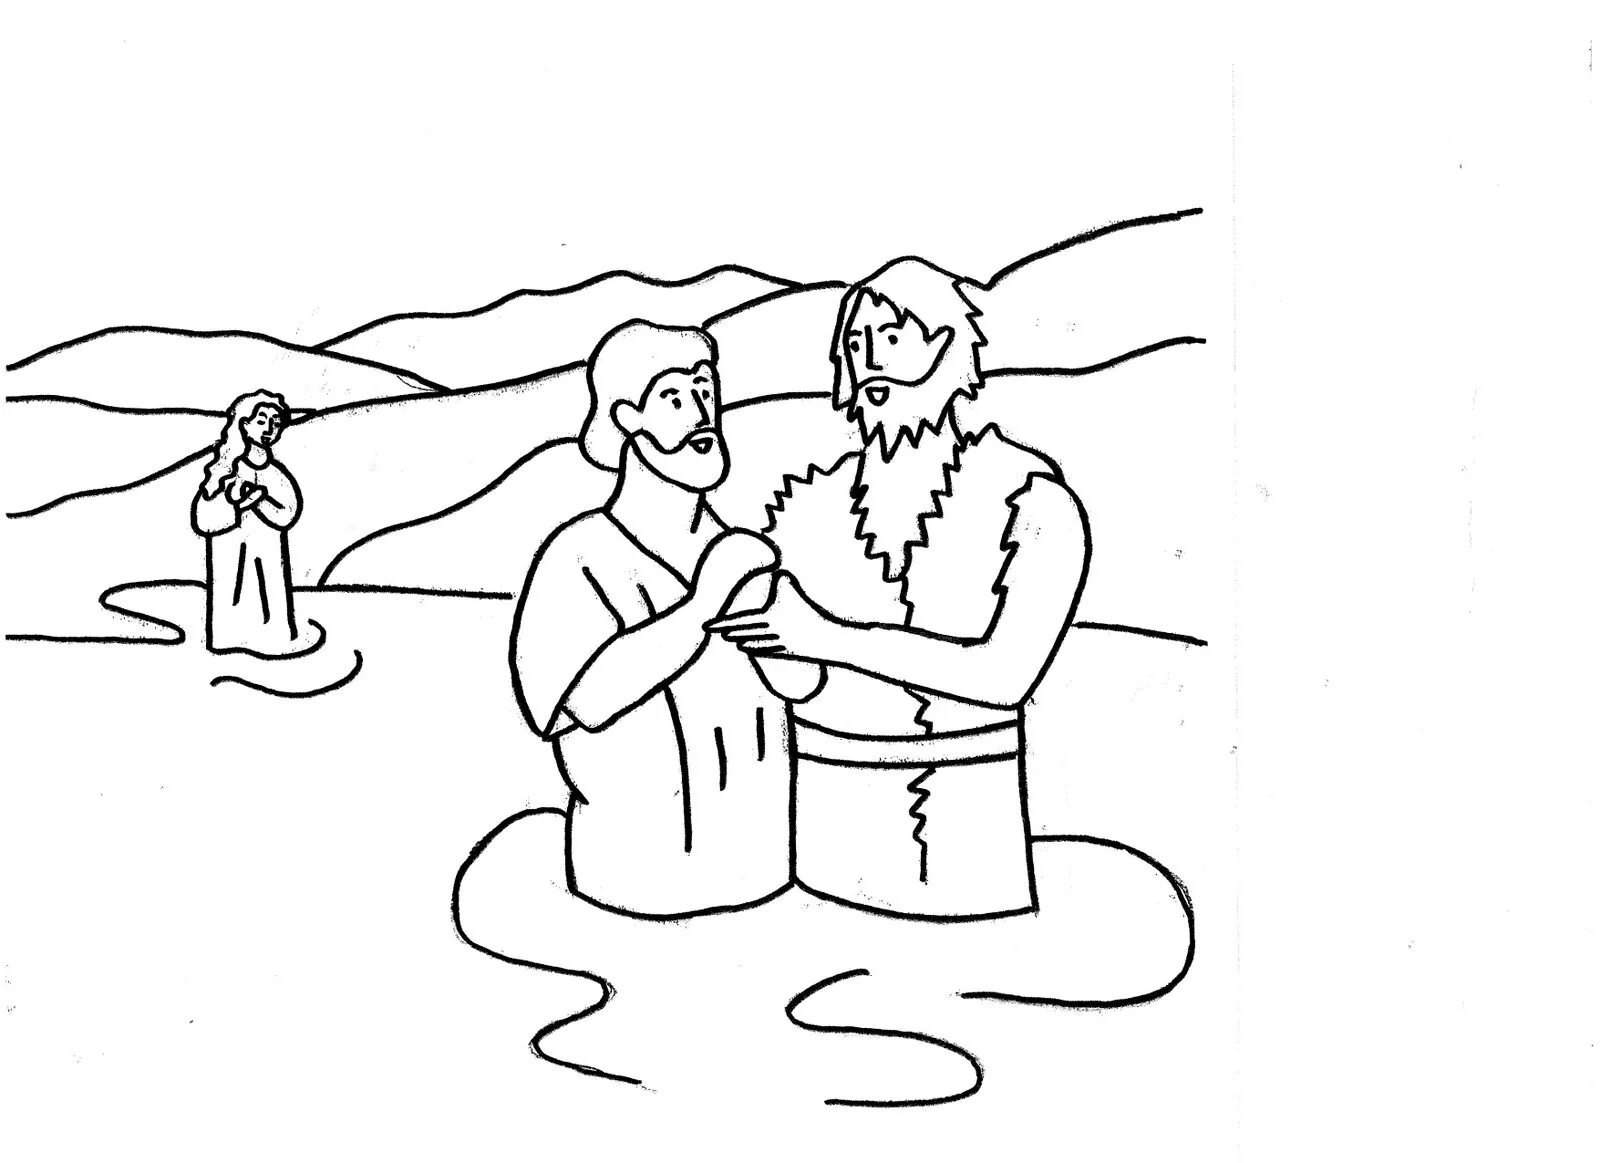 On baptism #6